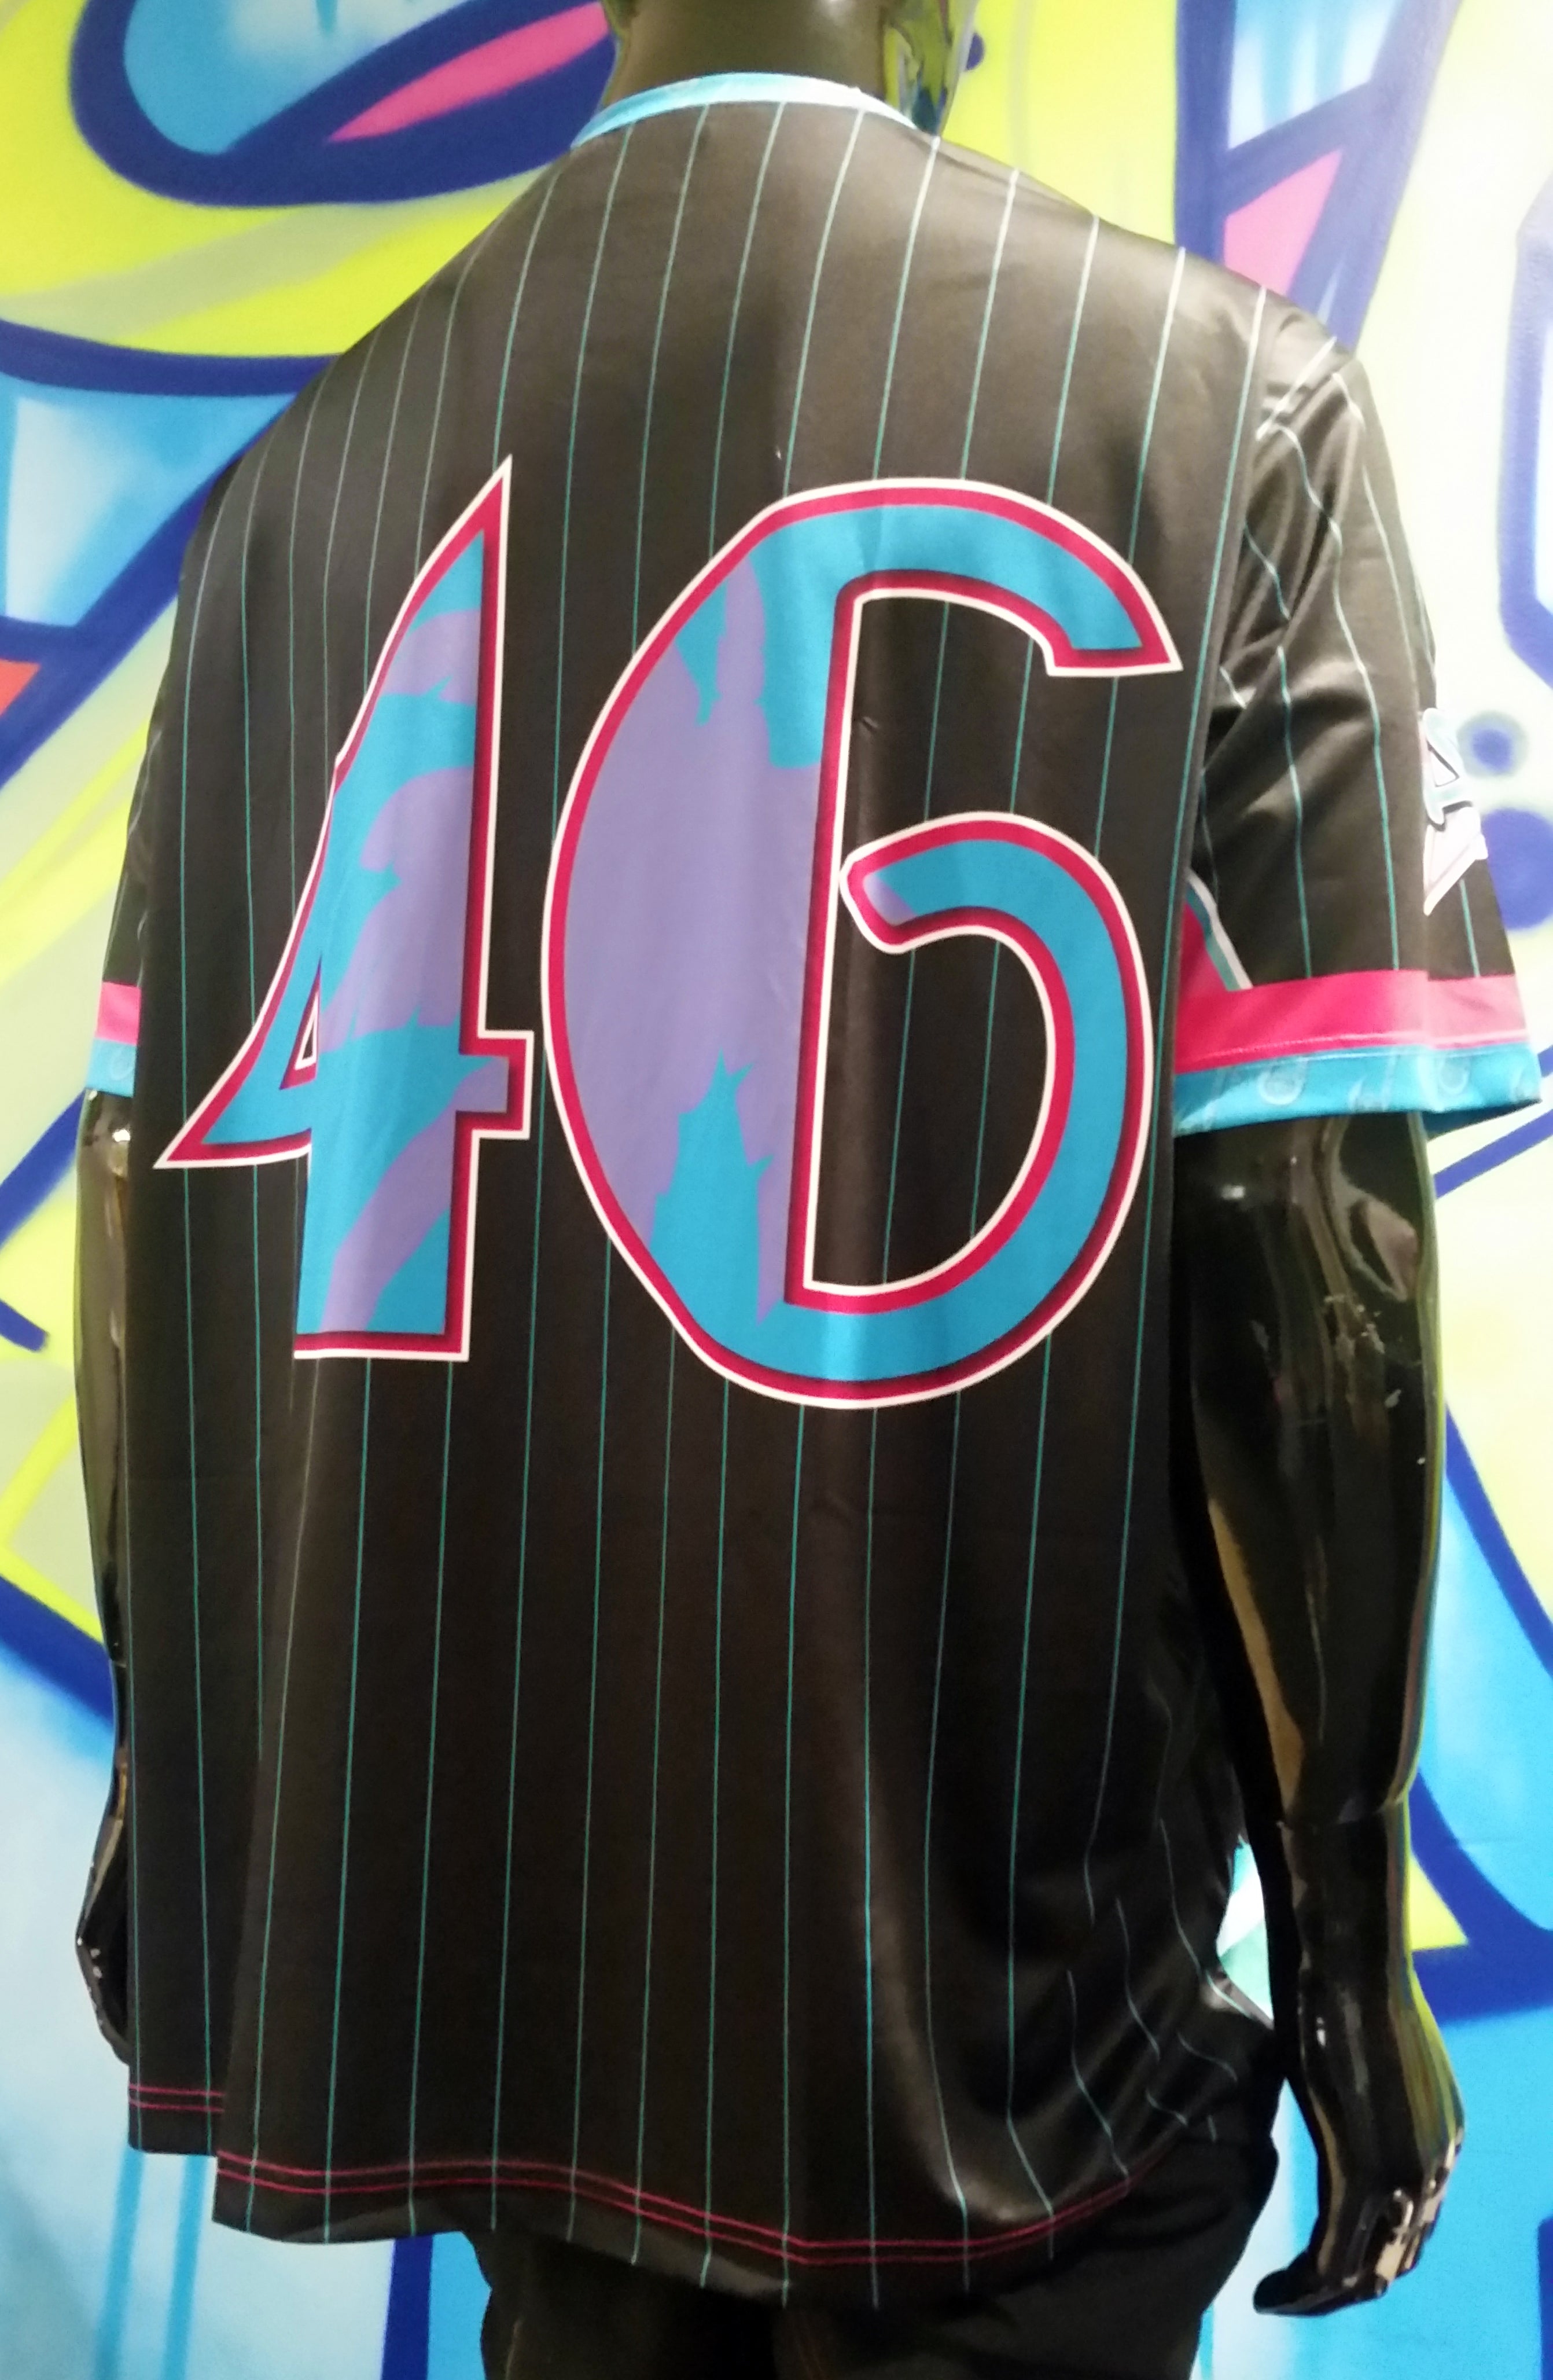 Yankees custom dye sublimated softball jersey